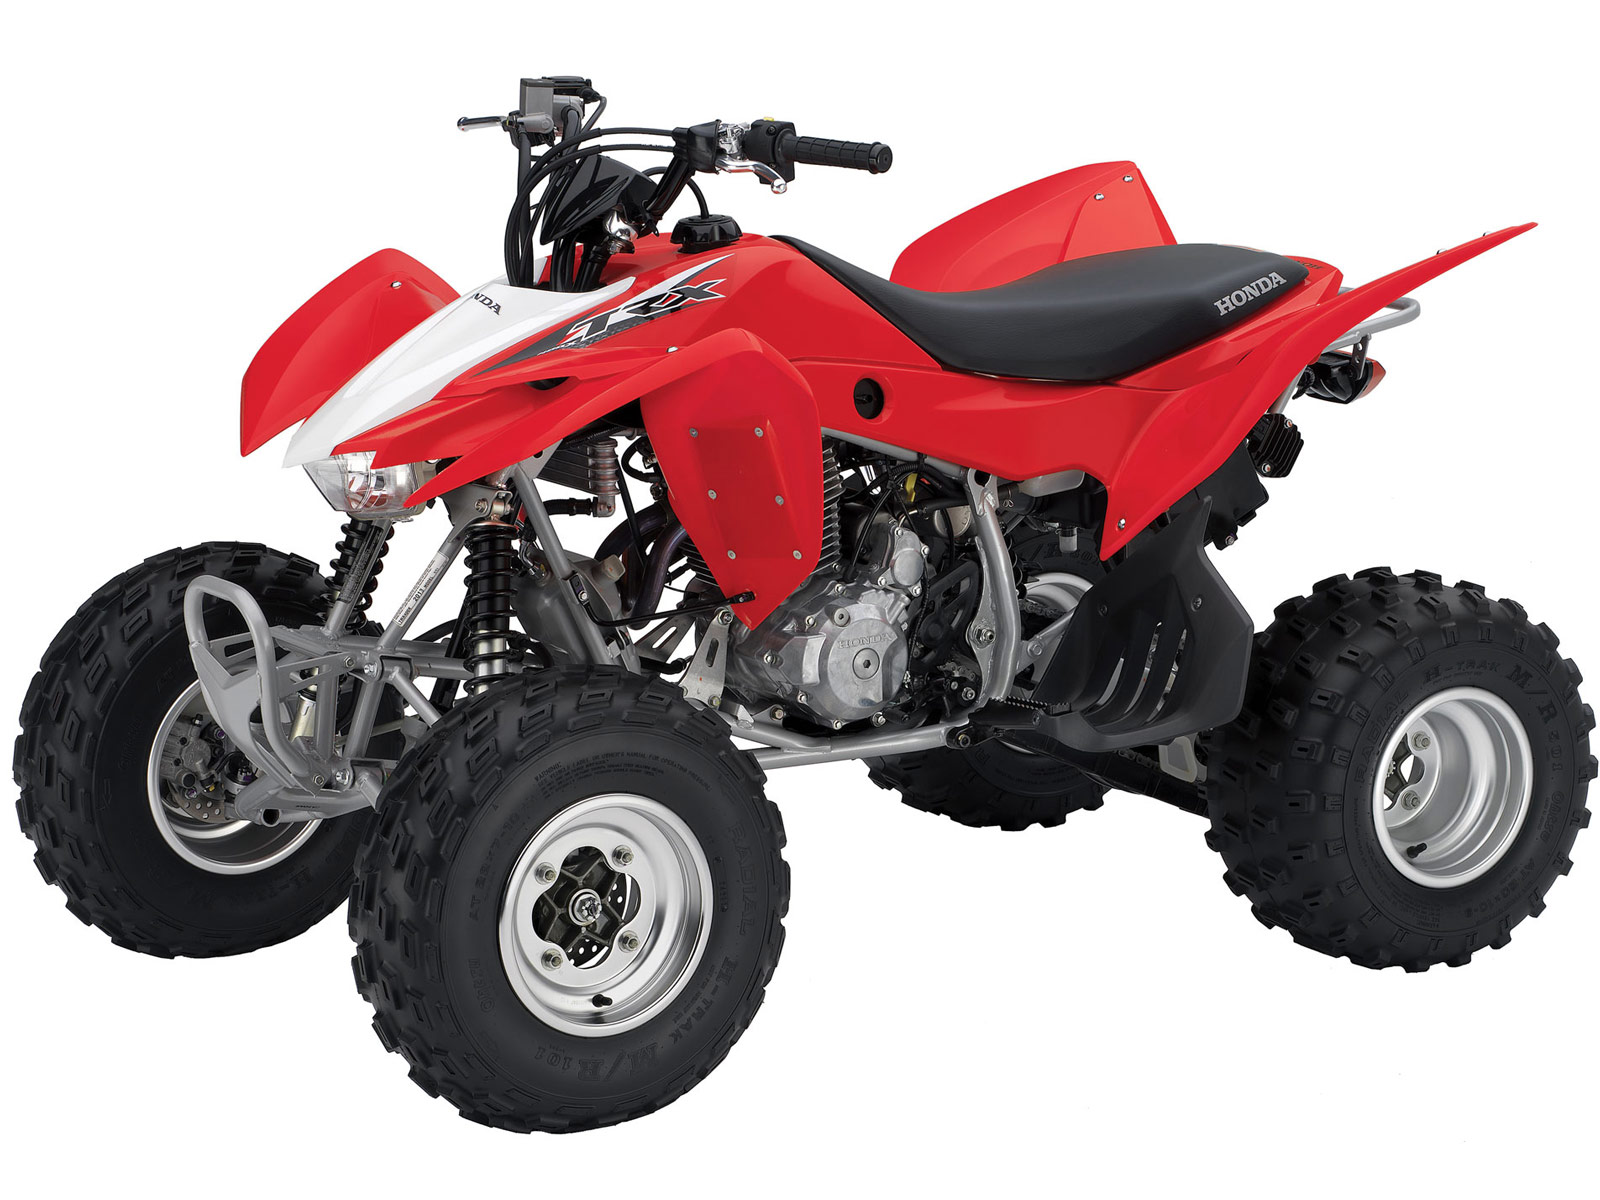 2013 Honda TRX400X ATV picrures | Auto insurance information